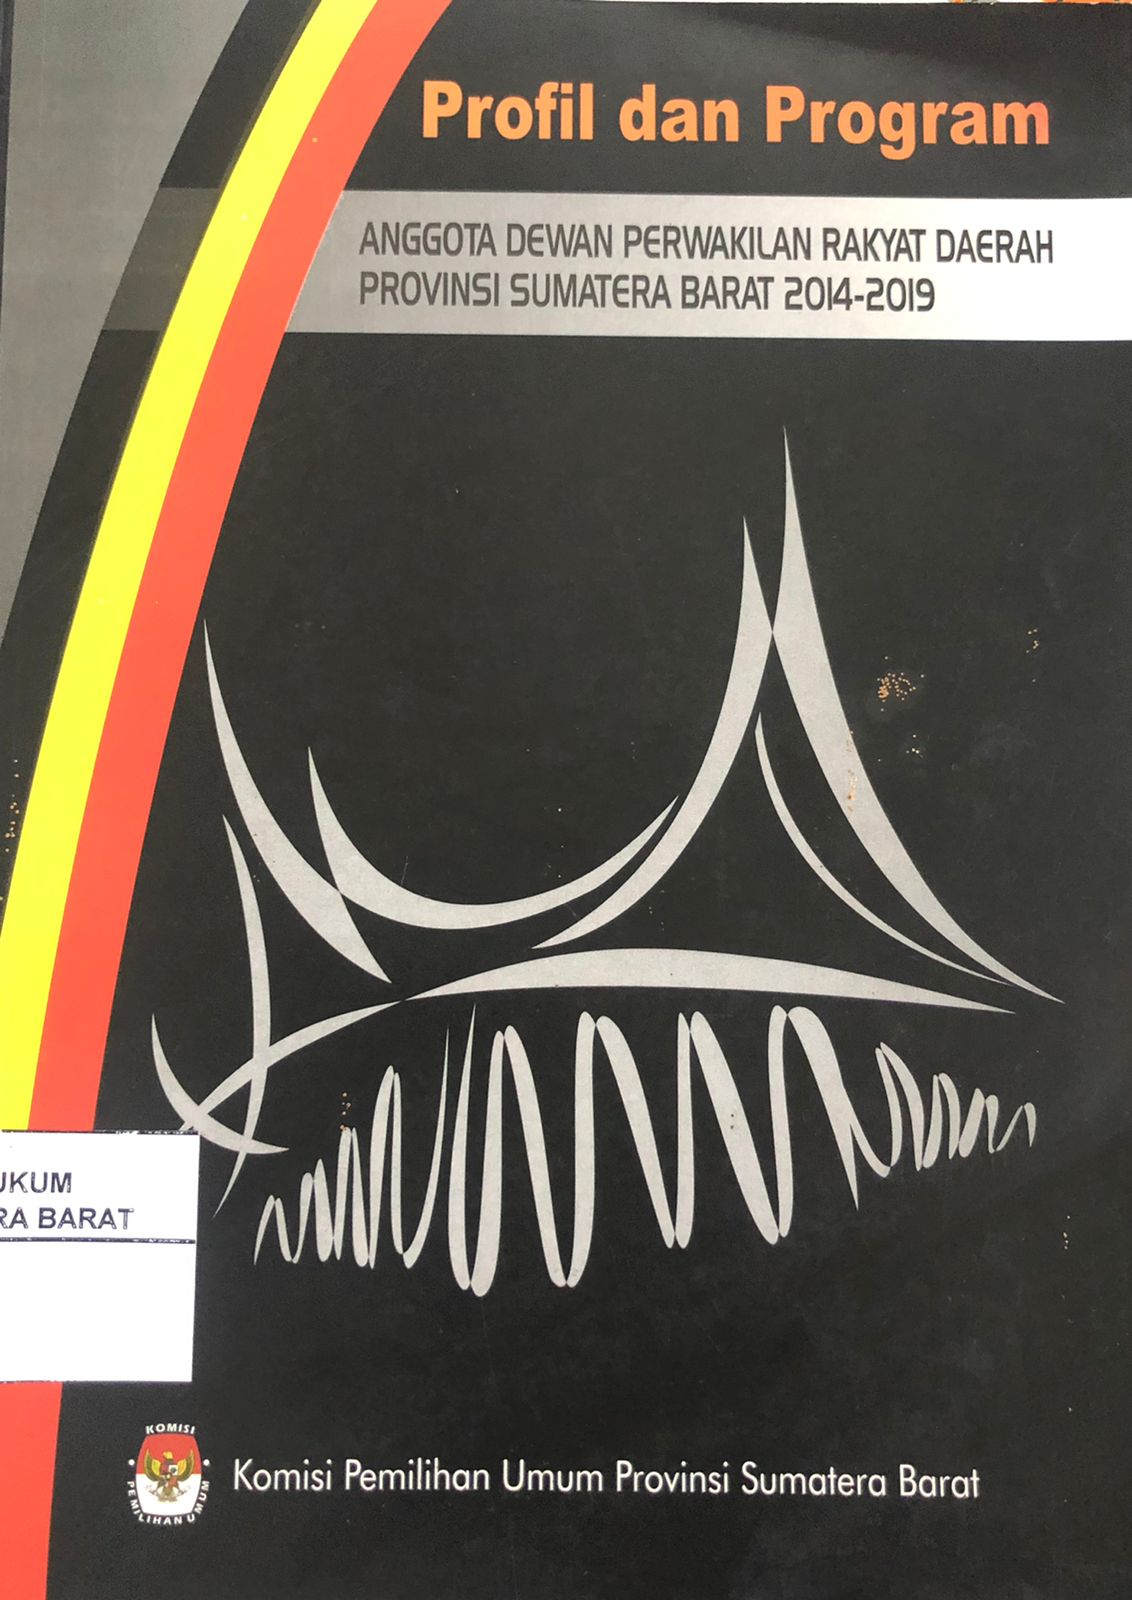 Profil dan Program Anggota Dewan Perwakilan Rakyat Daerah Provinsi Sumatera Barat 2014-2019